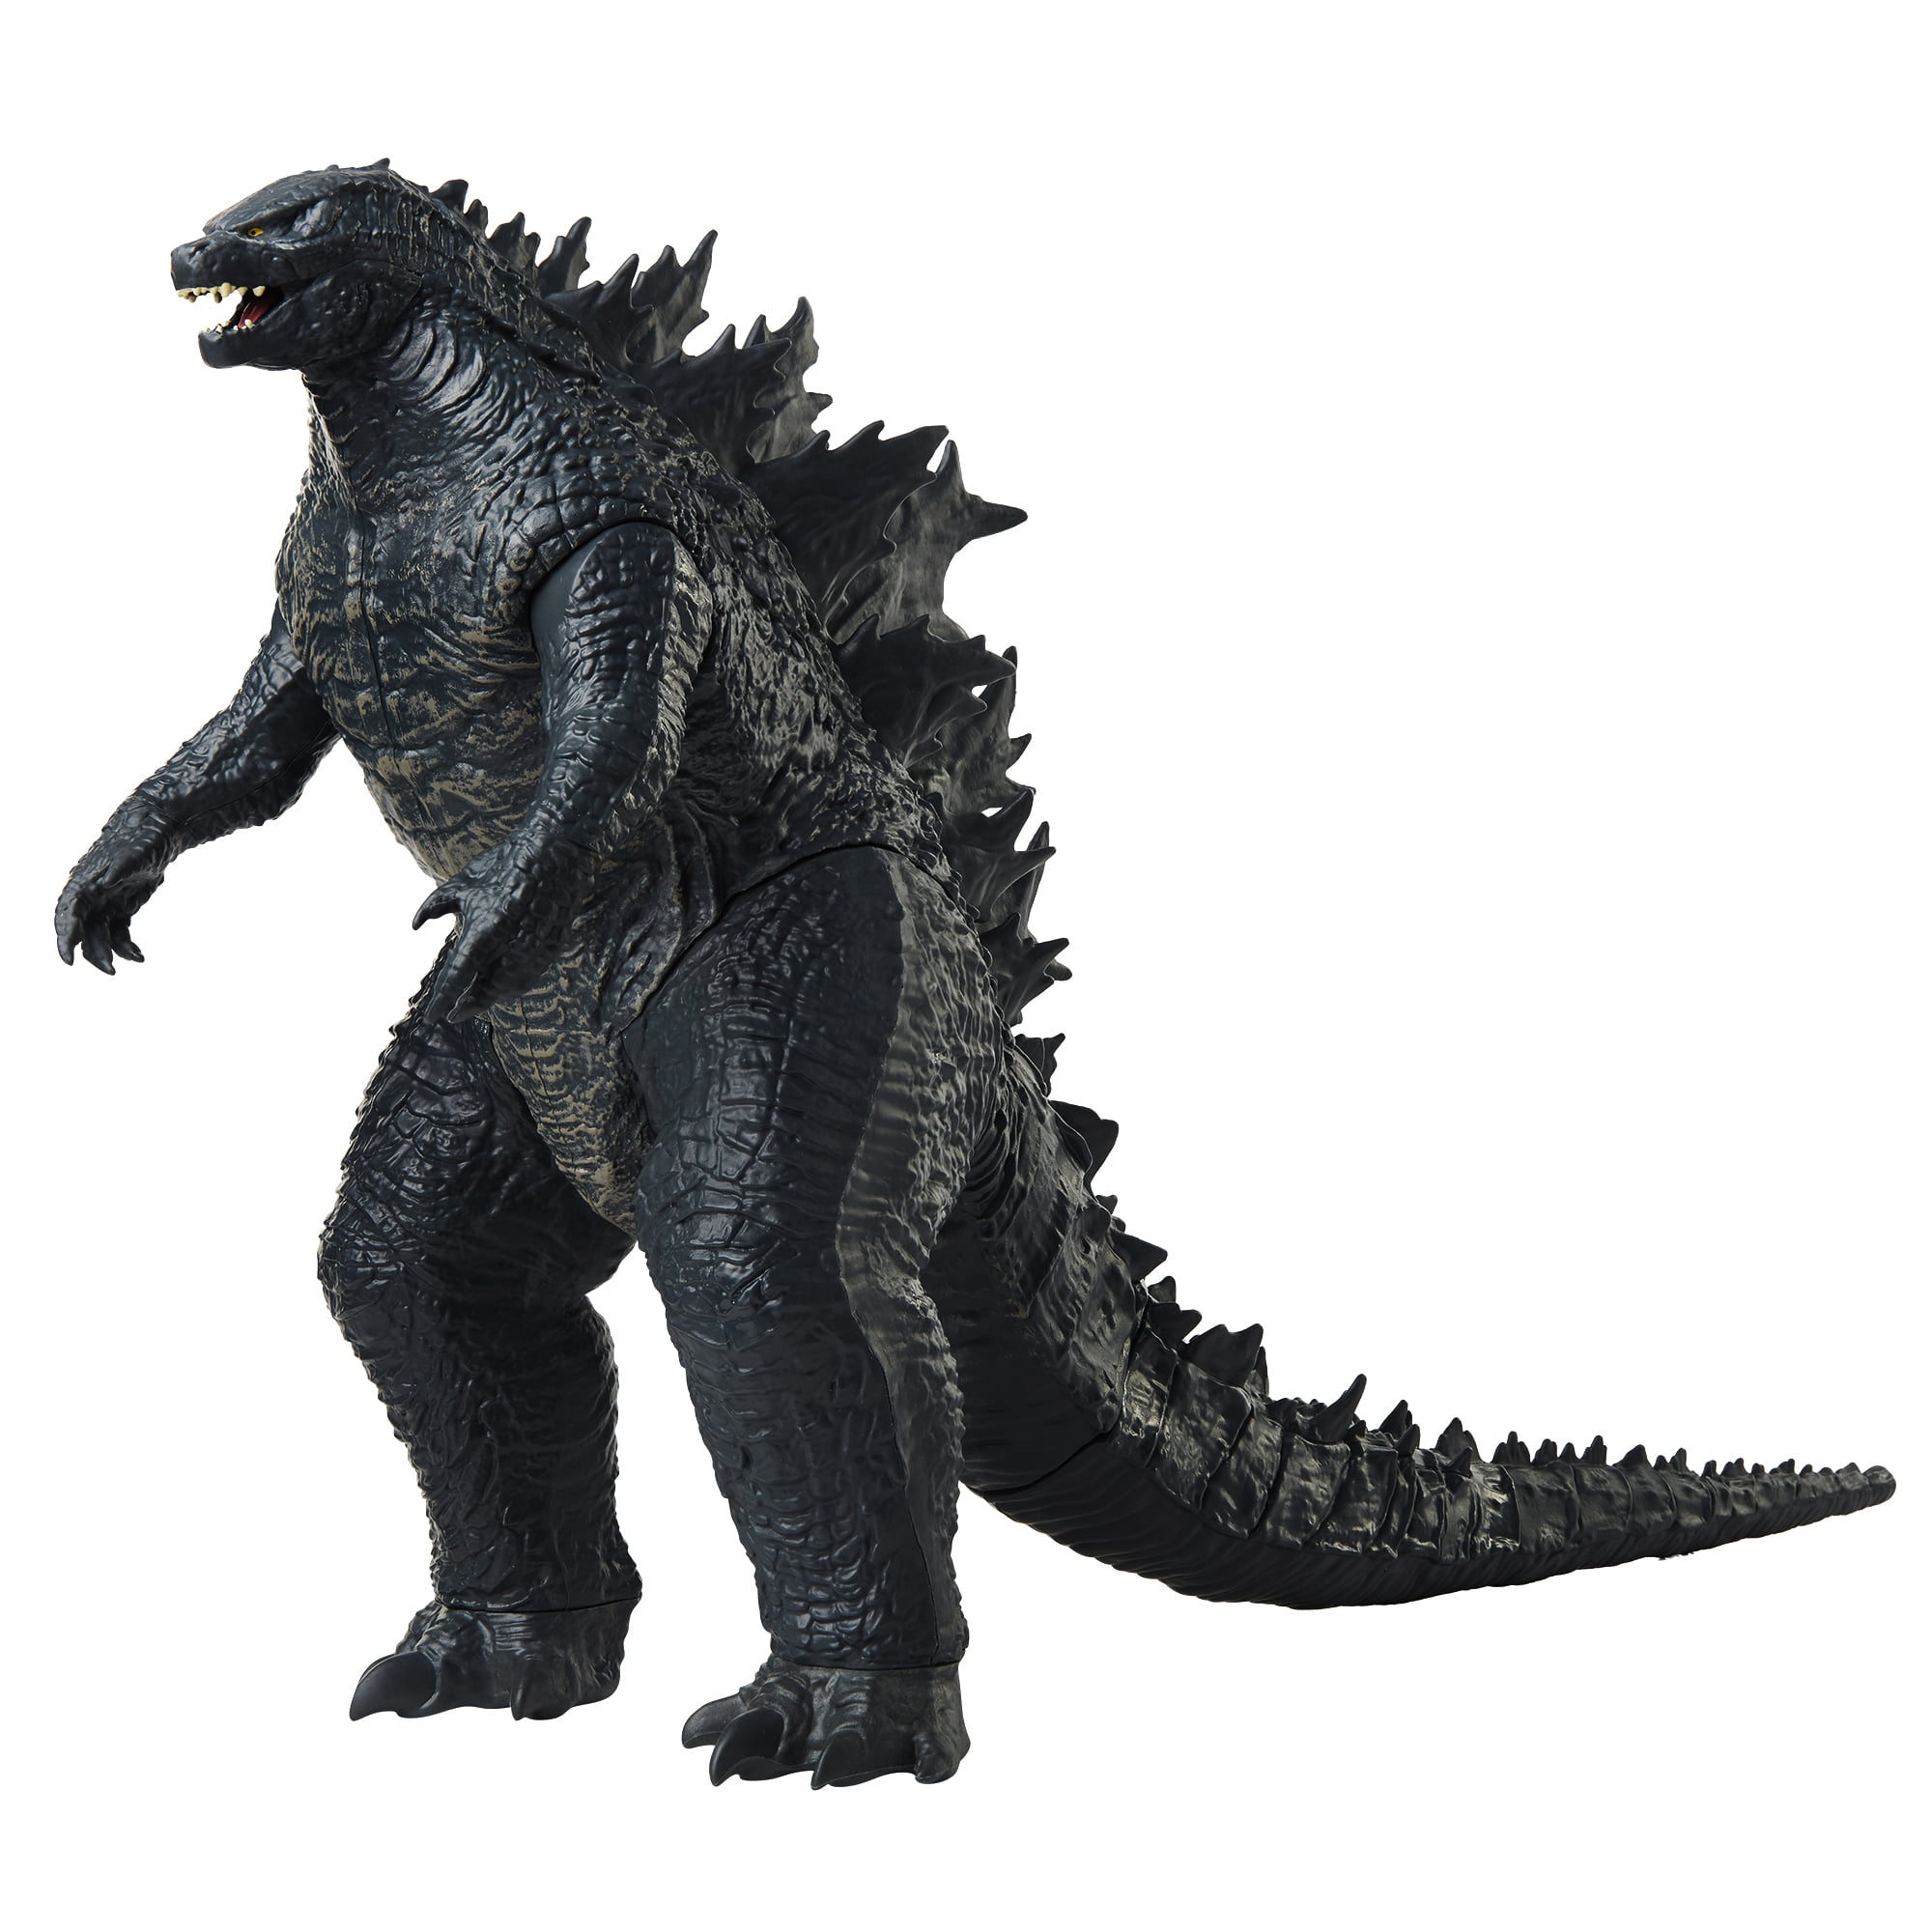 12" tête-à-Queue Figurine 2019 Godzilla 28870